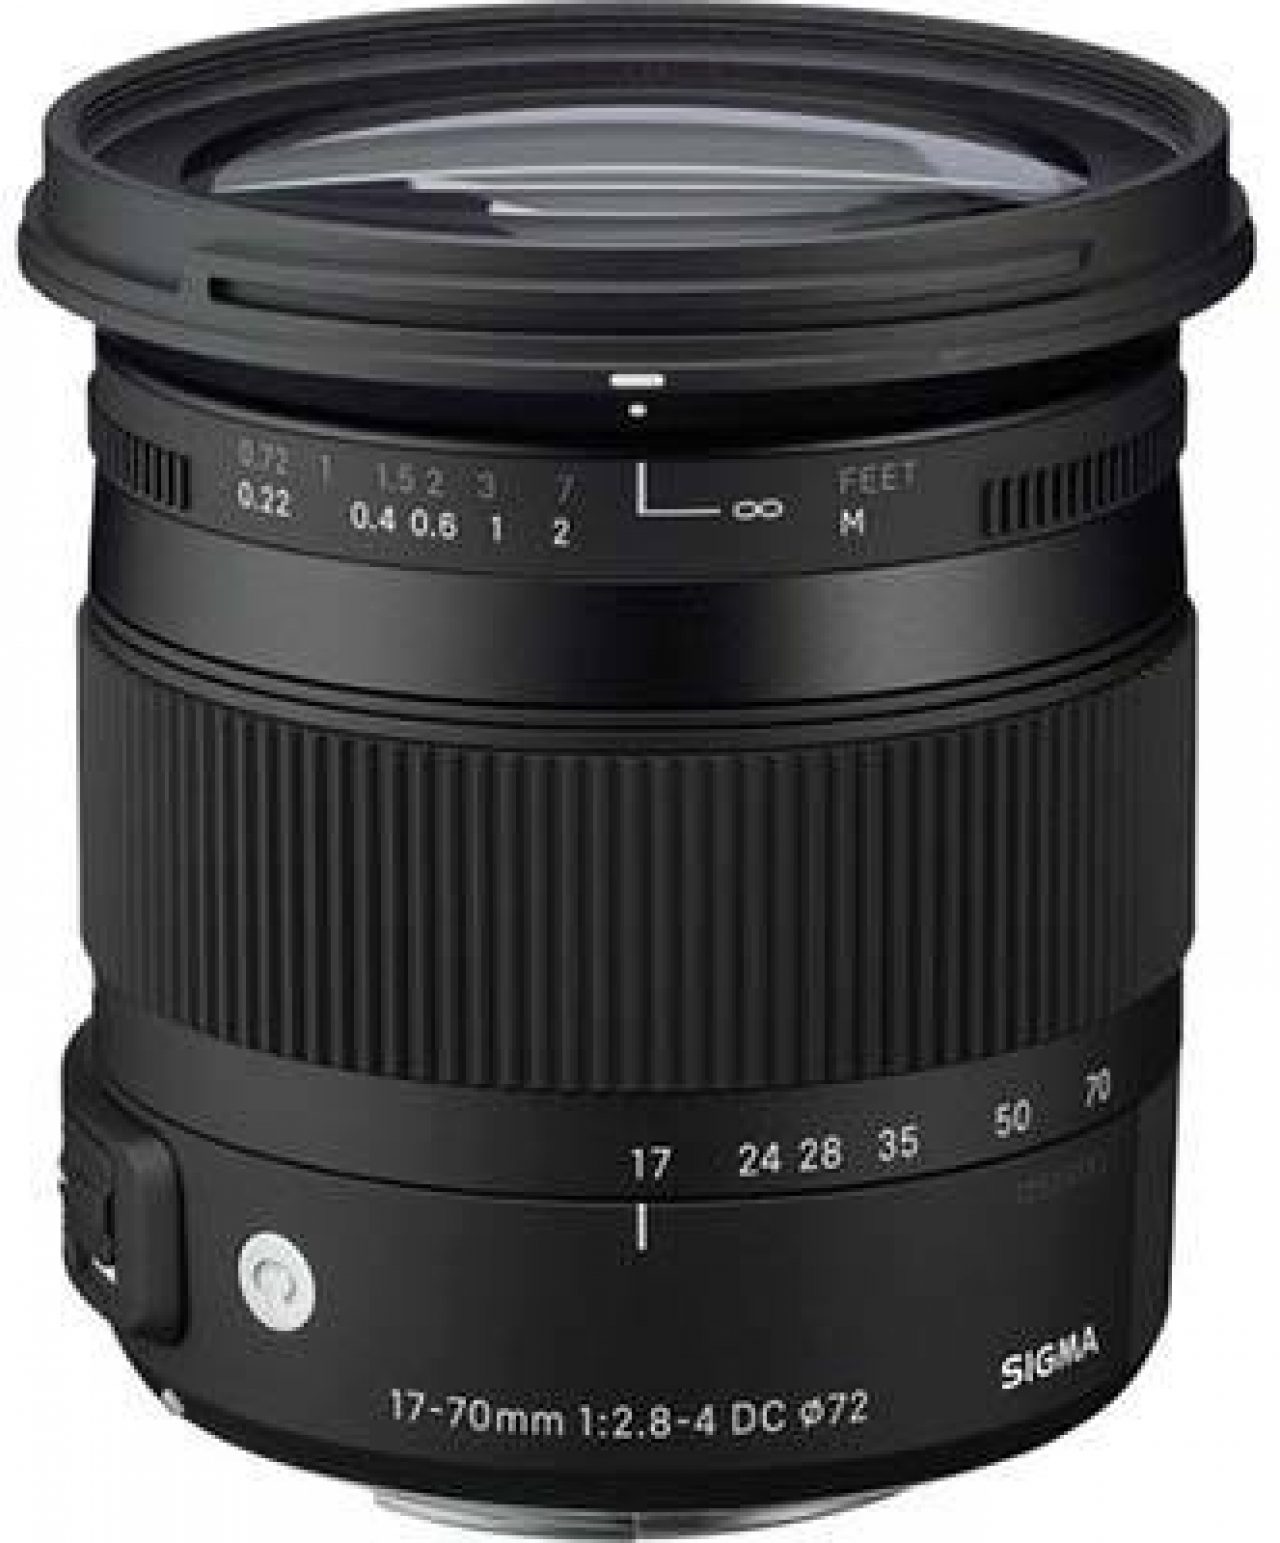 LH780-03 Sigma Lens Hood for 17-70mm F2.8-4 Macro C 